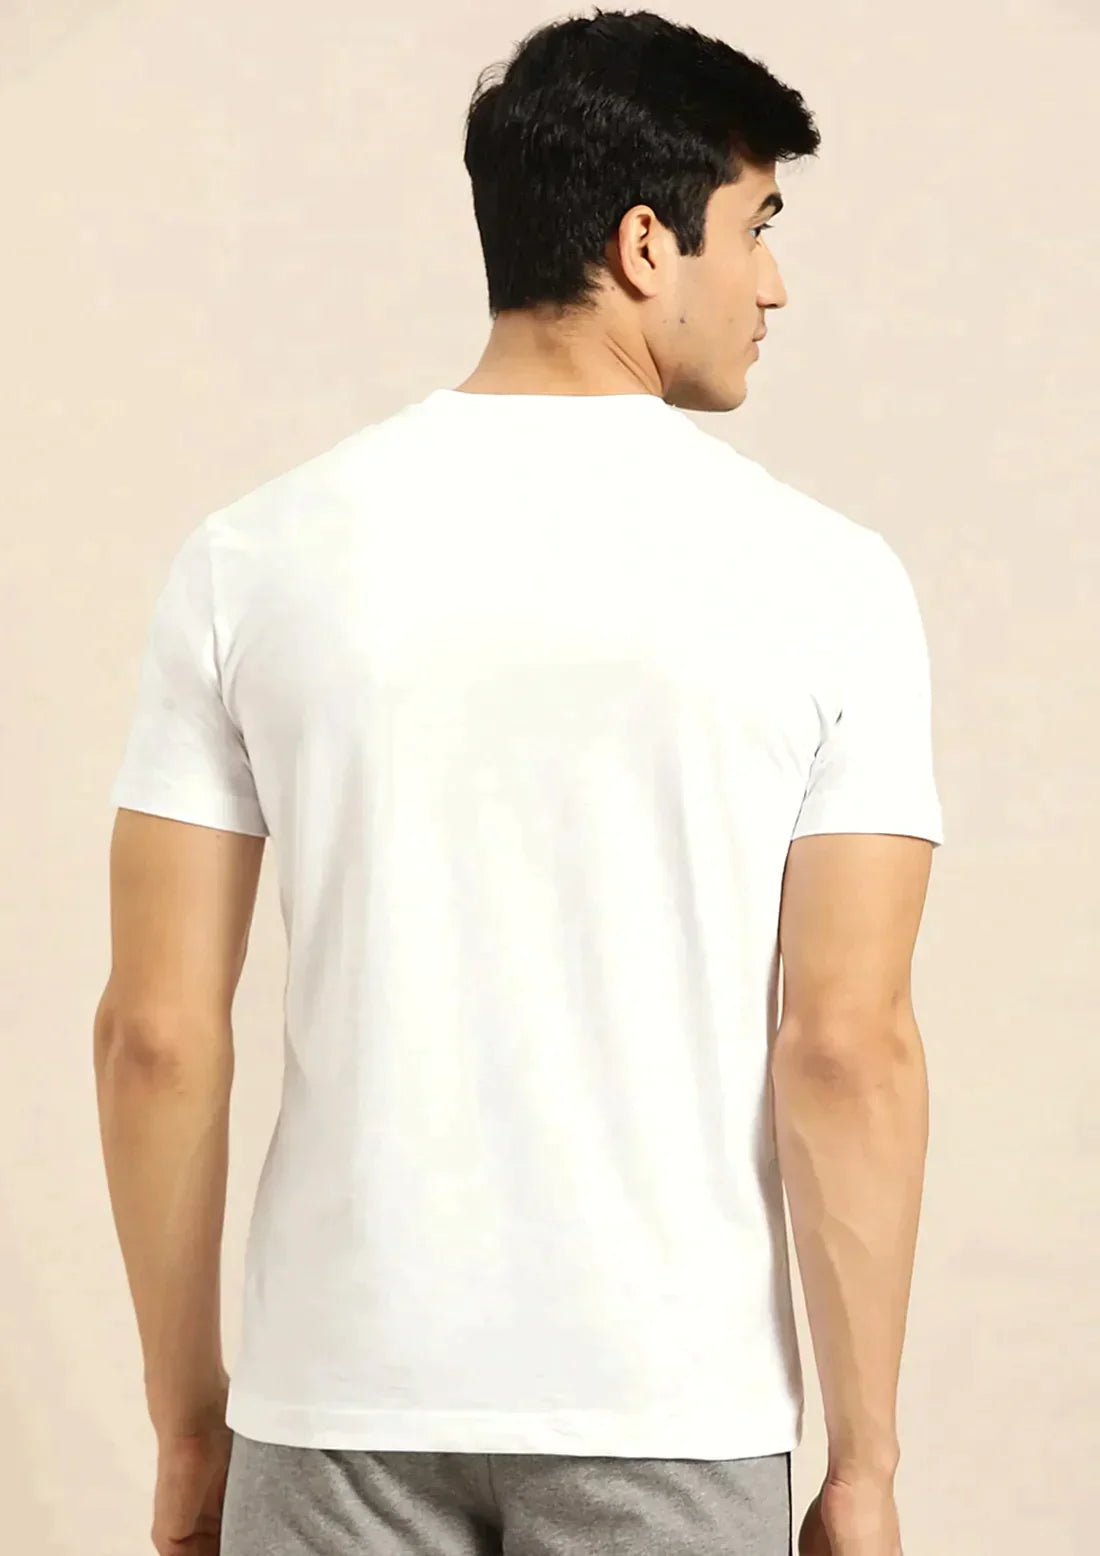 Lily White Design Printed Mens Cotton Half Sleeves Shirts